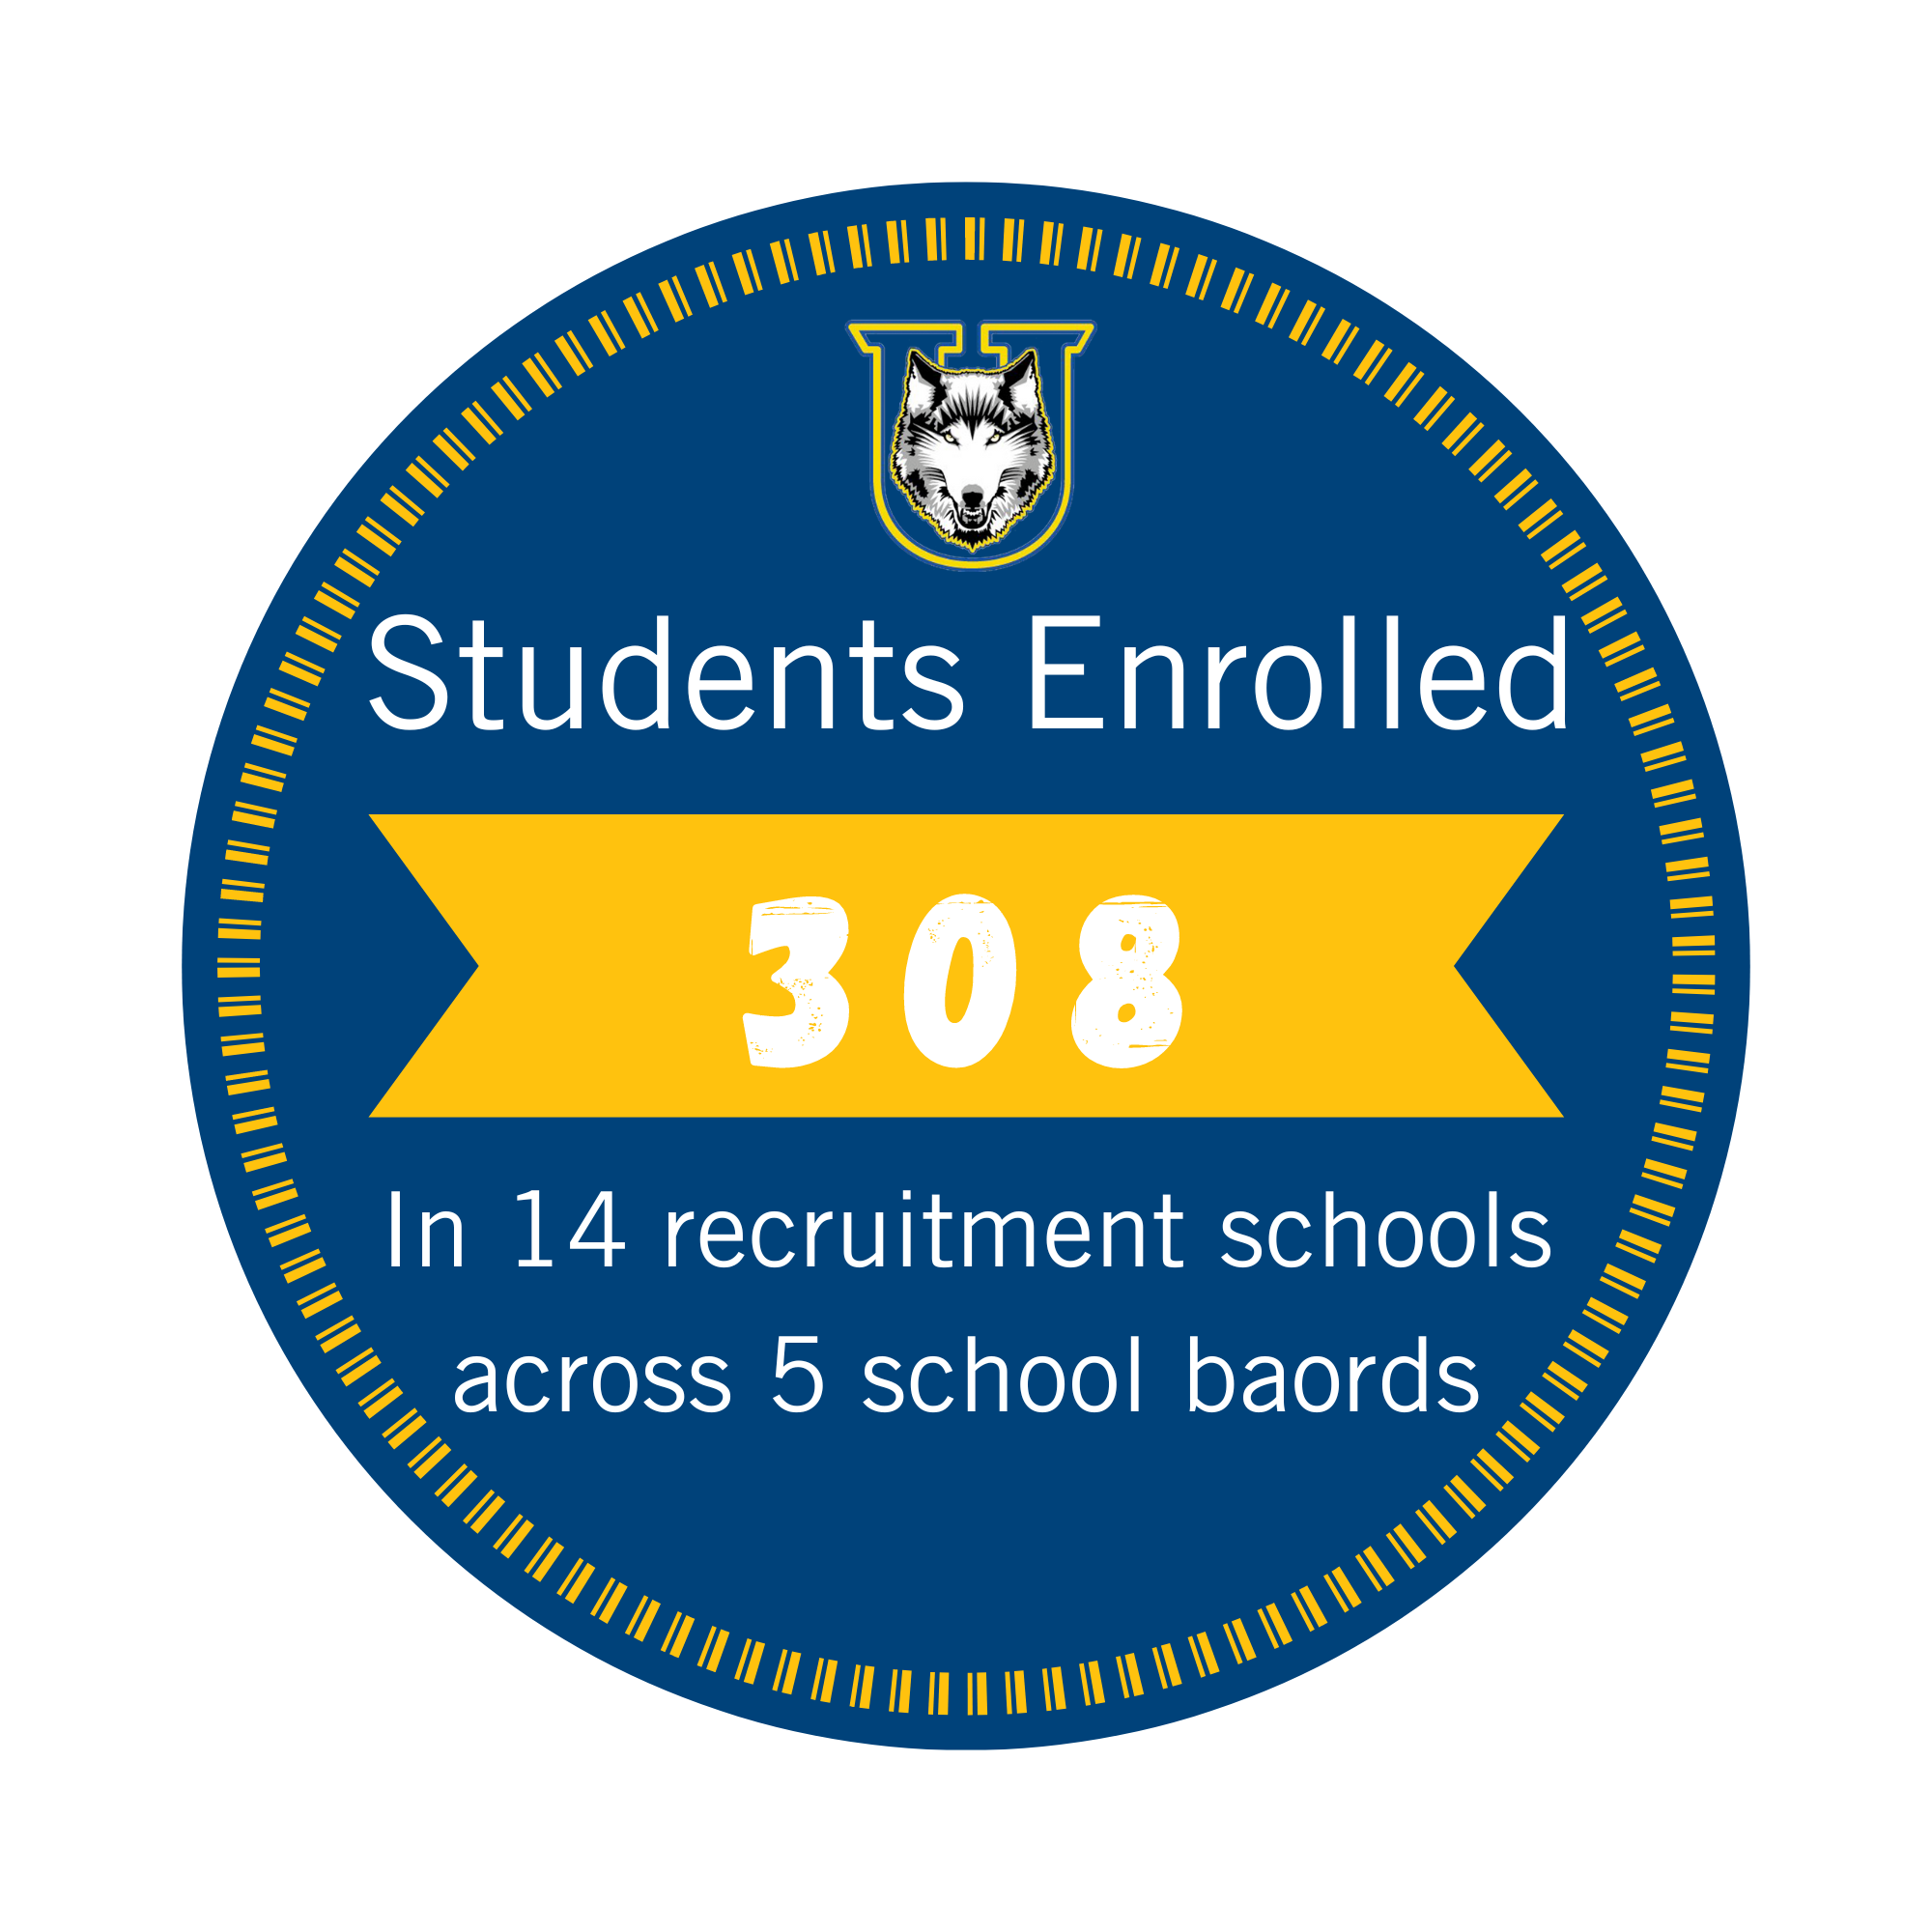 308 students enrolled in 14 recruitment schools across 5 school boards